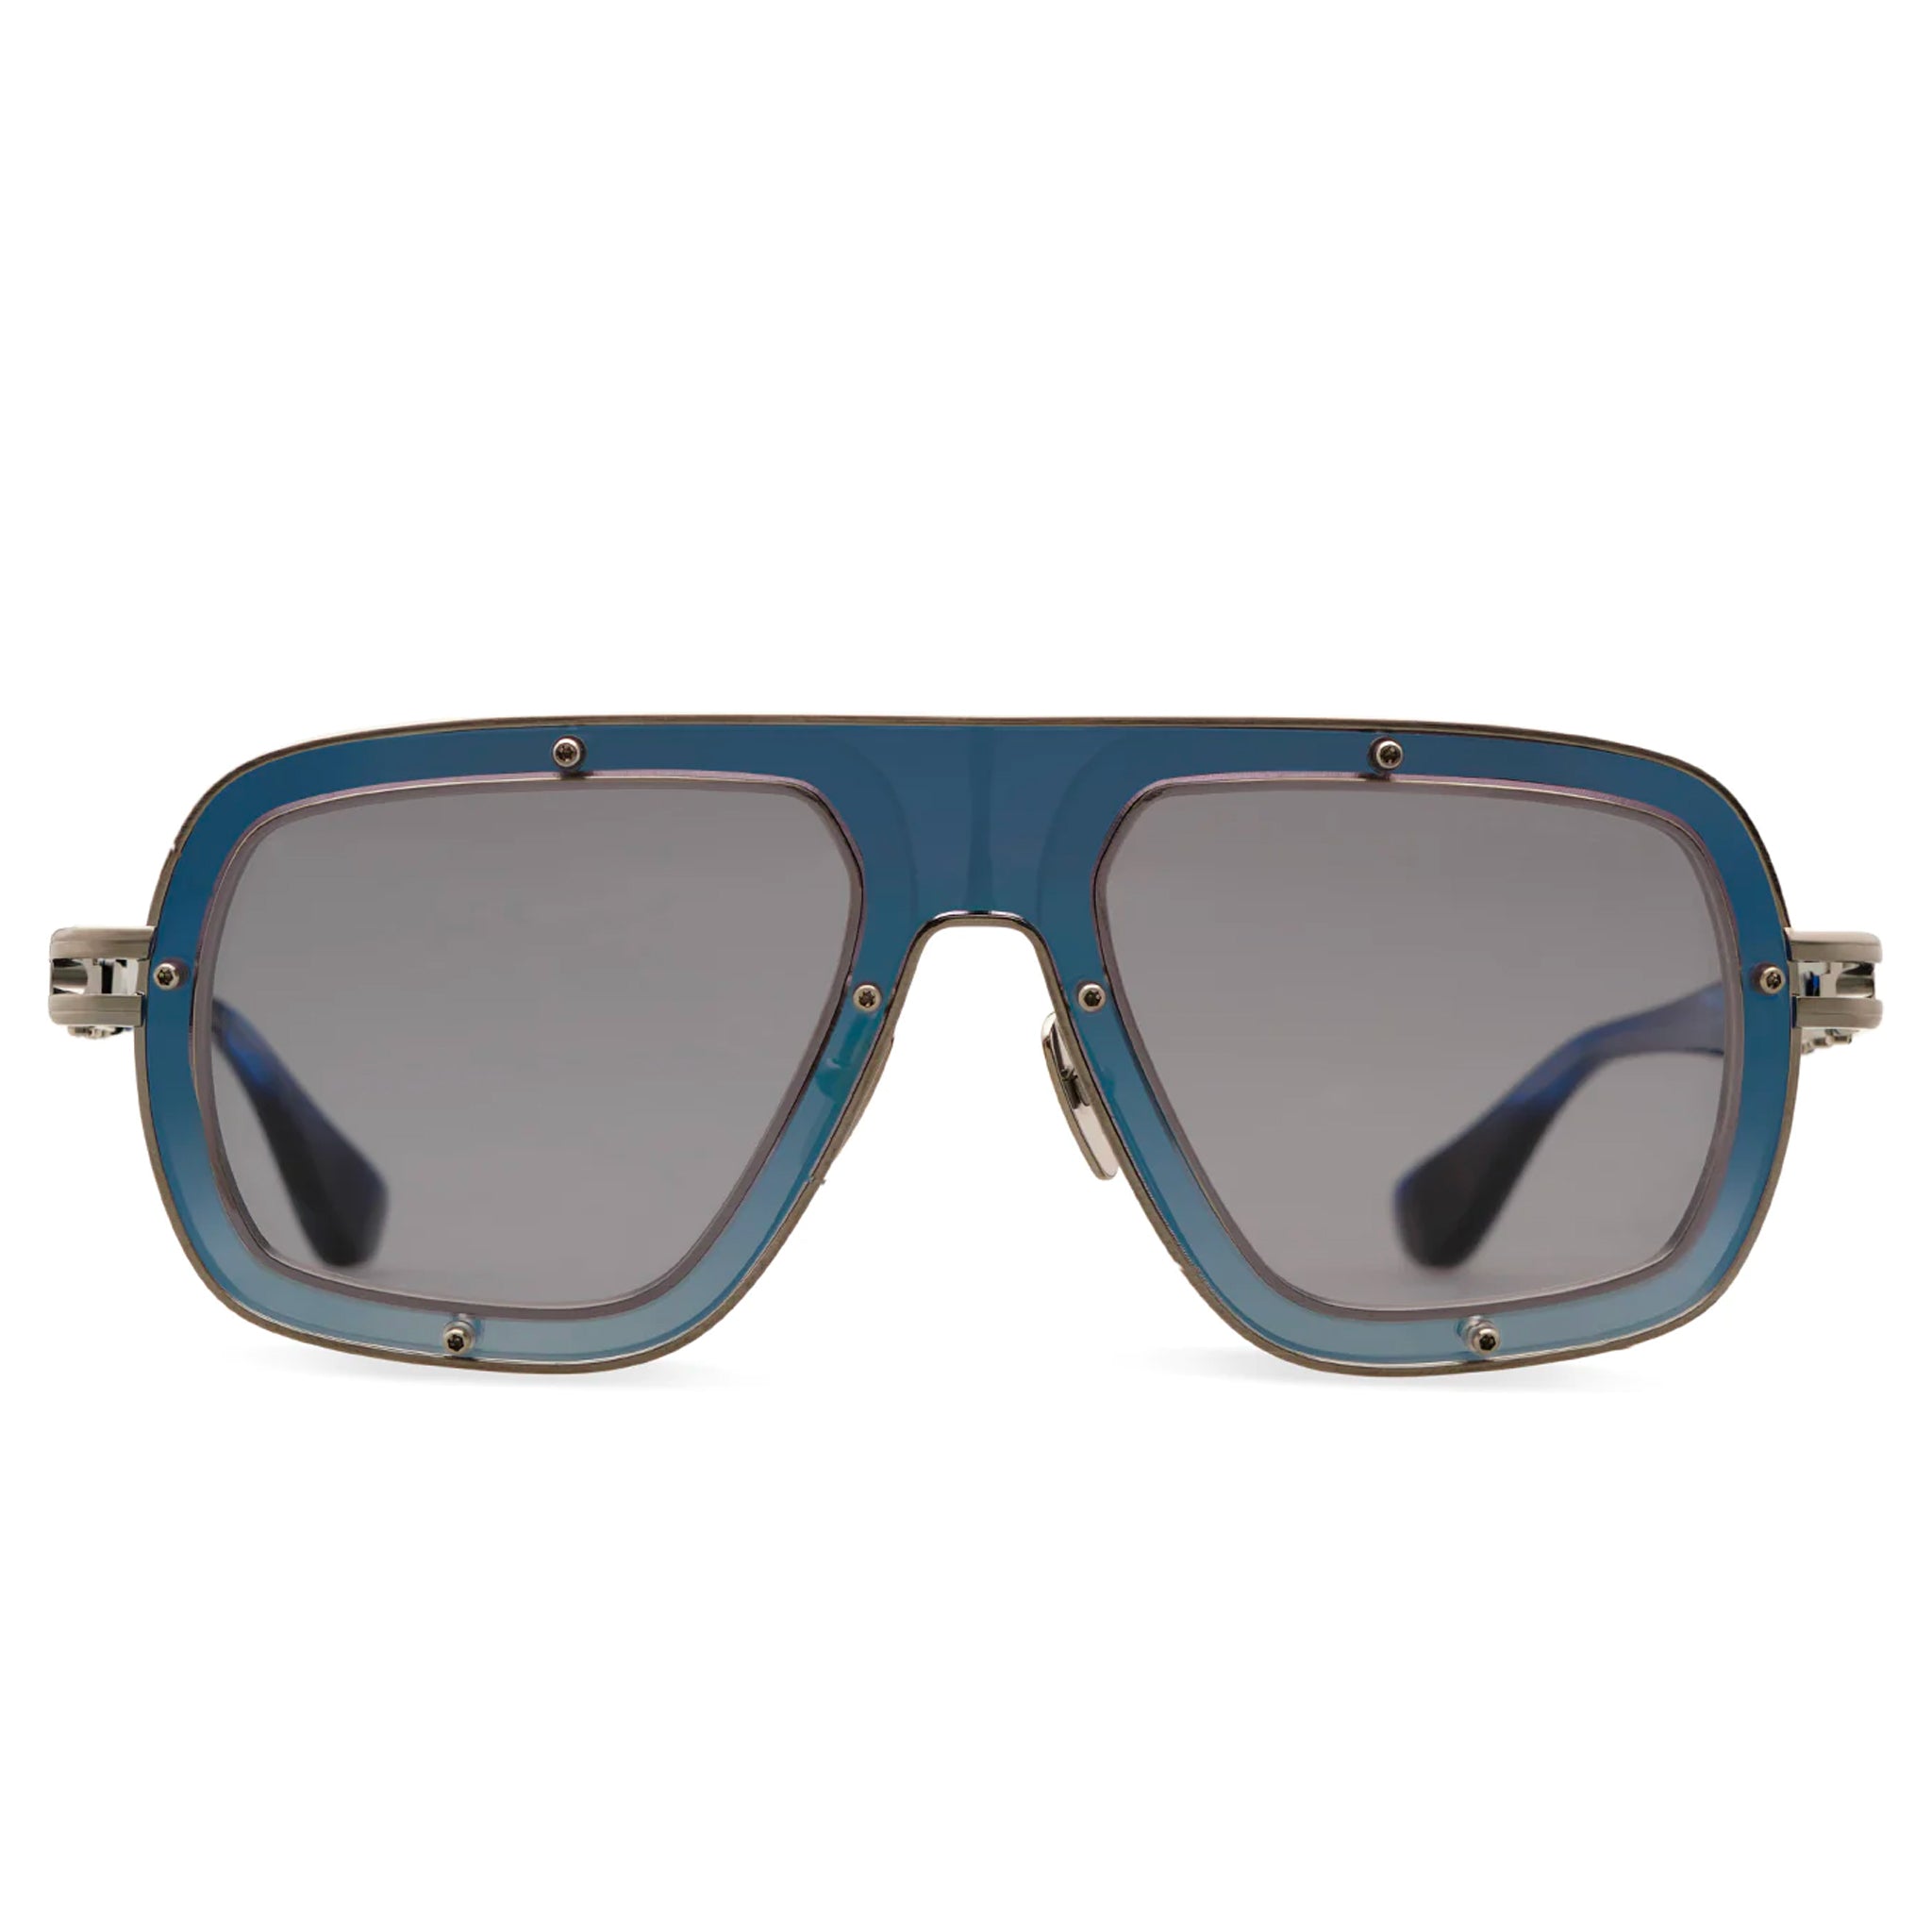 Louis Vuitton Men's Sunglasses for sale in Manchester, United Kingdom, Facebook Marketplace